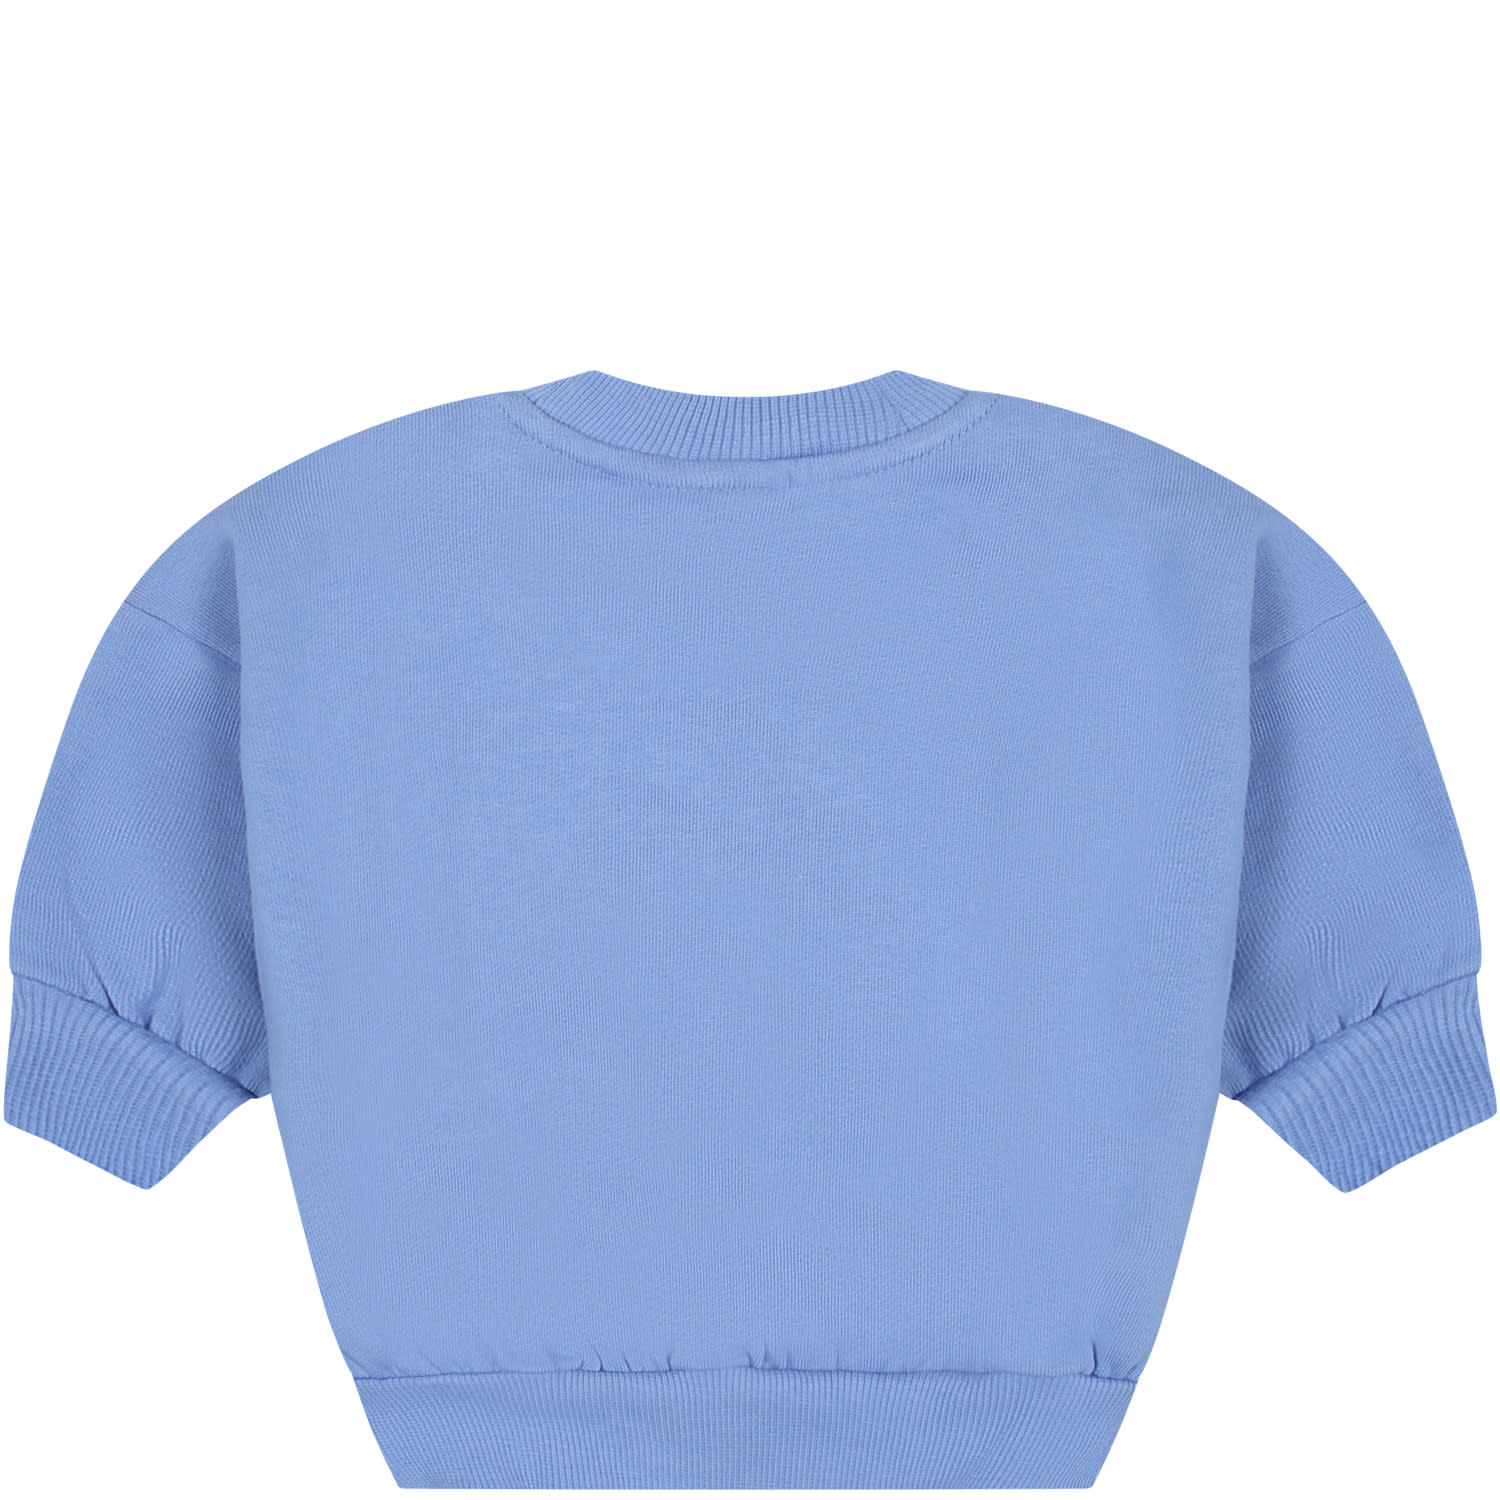 Shop Mini Rodini Light Blue Sweatshirt For Baby Kids With Dog